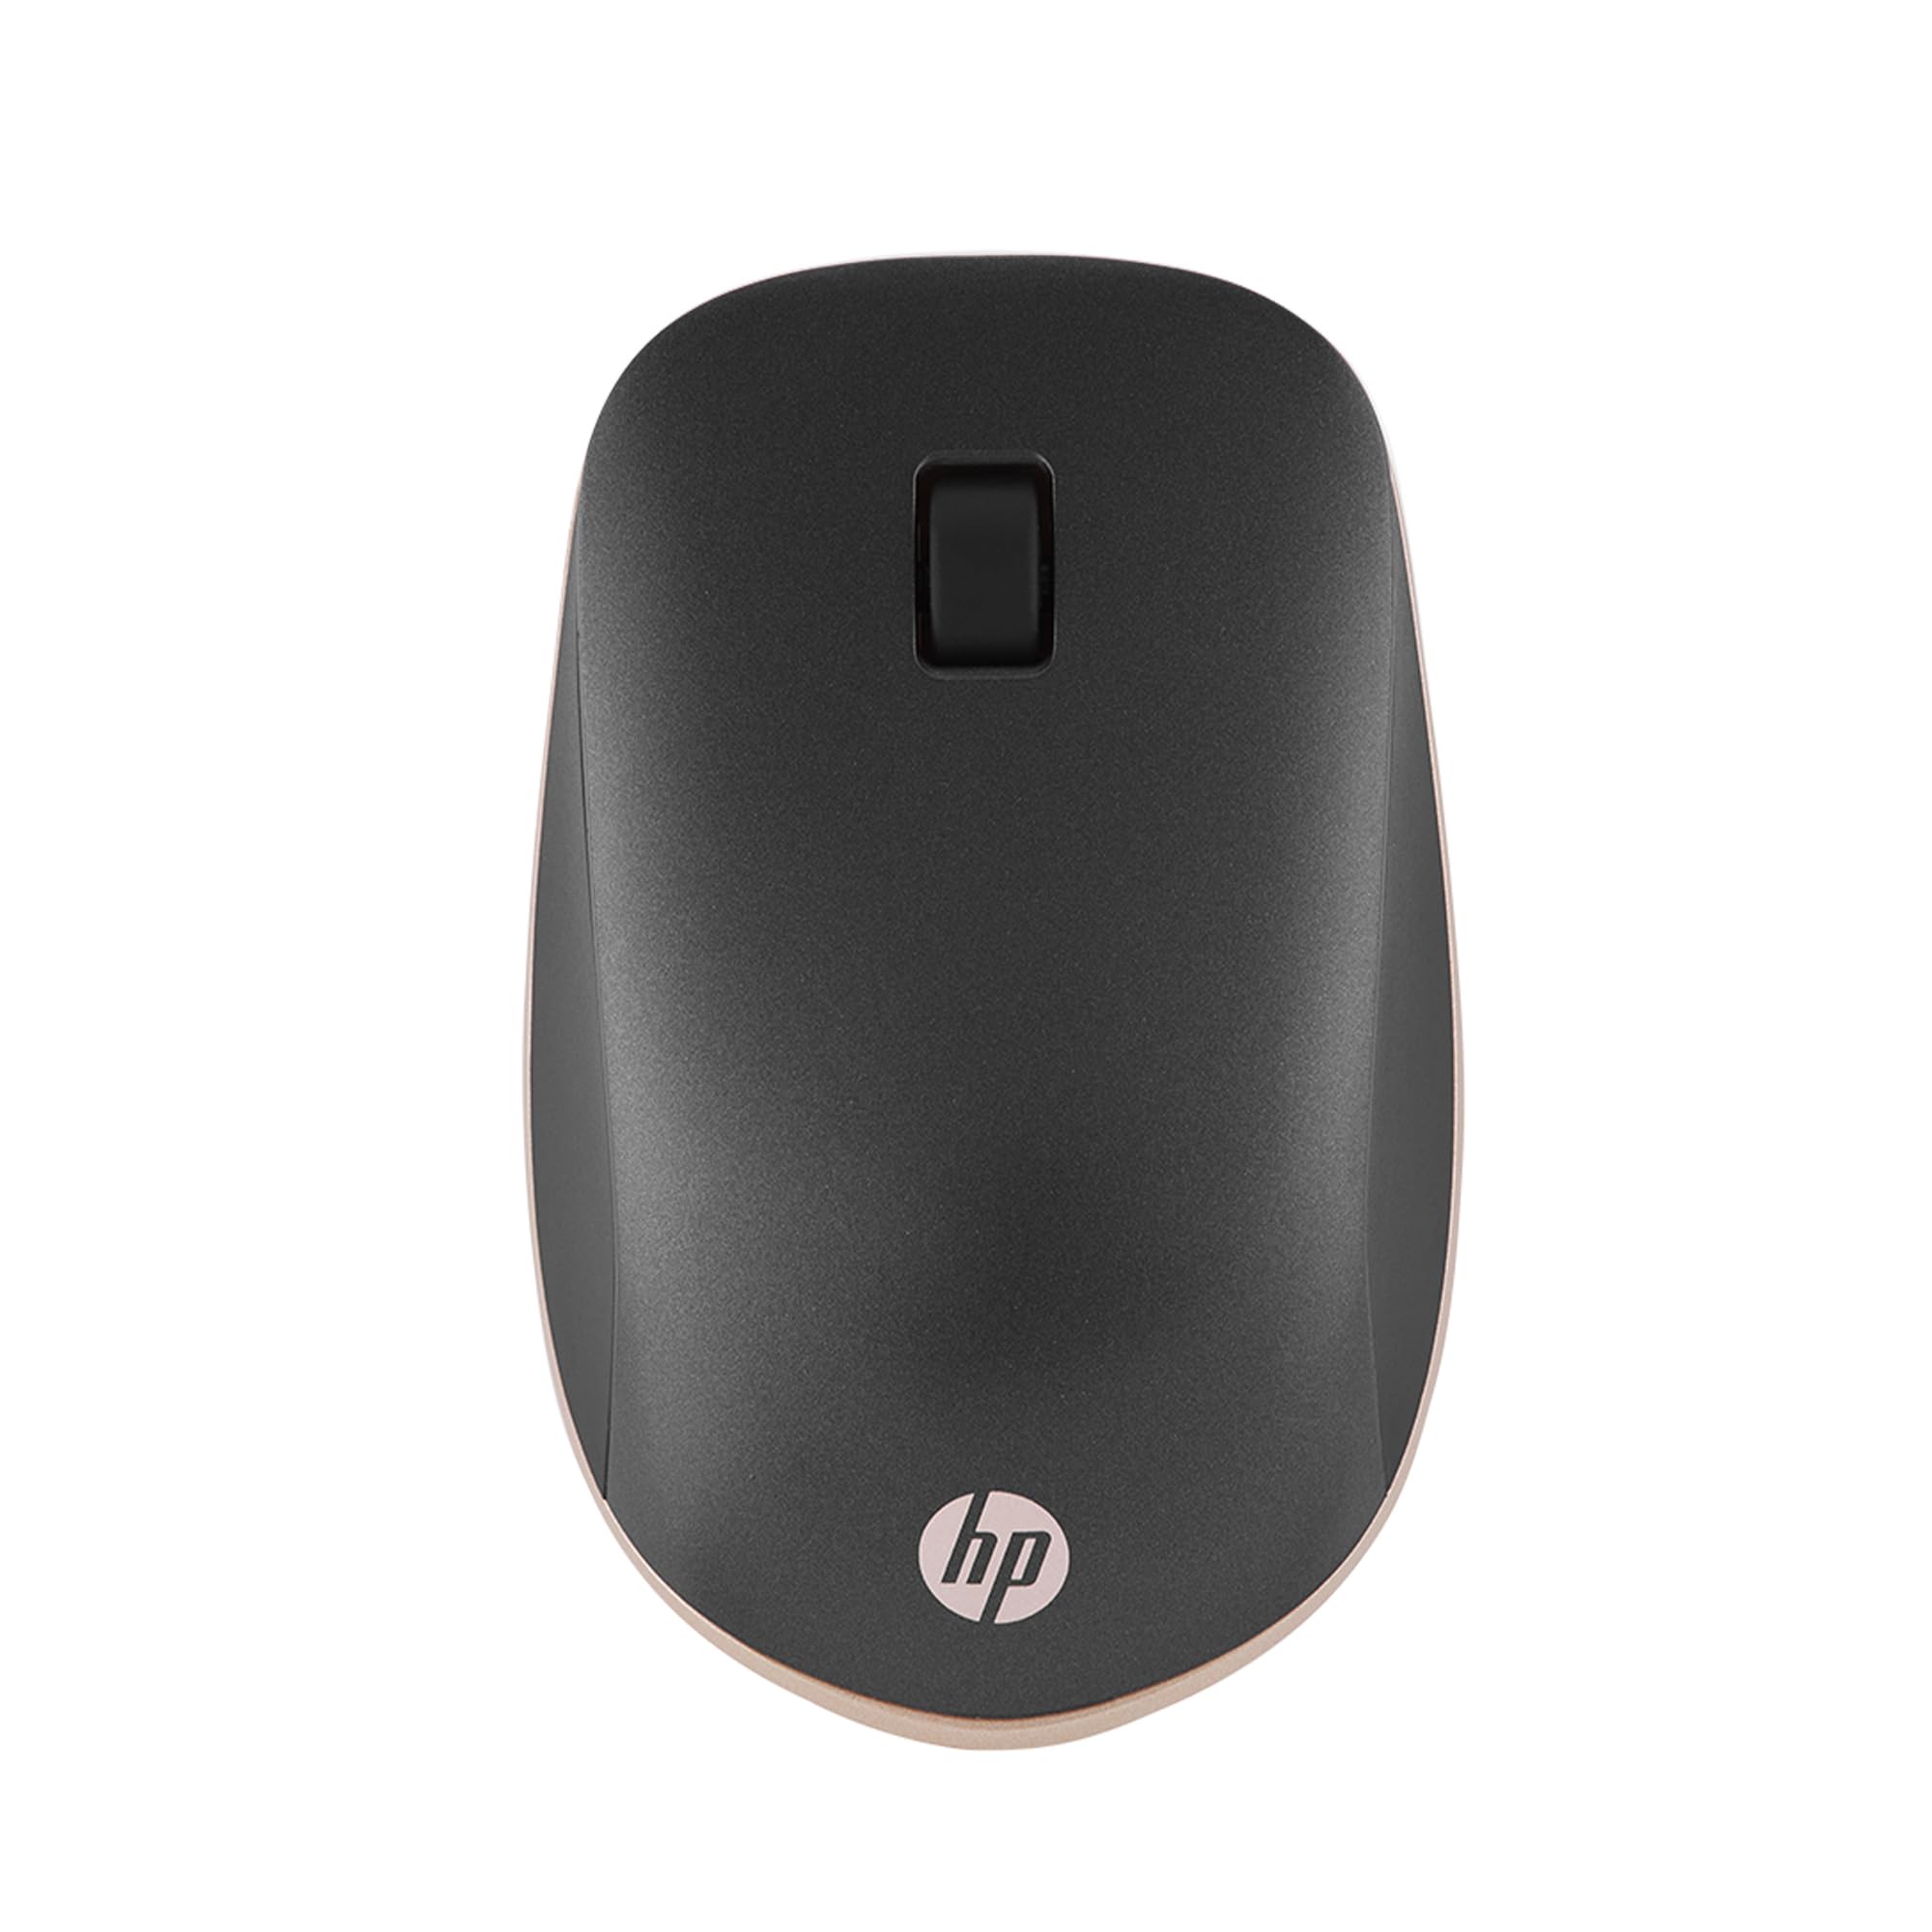 HP ワイヤレスマウス Bluetooth ワイヤレス 無線 薄型 マウス HP 410 Slim スリム ブラック(型番:4M0X5AA#UUF) Bluetooth5 iPad ChromeOS Mac